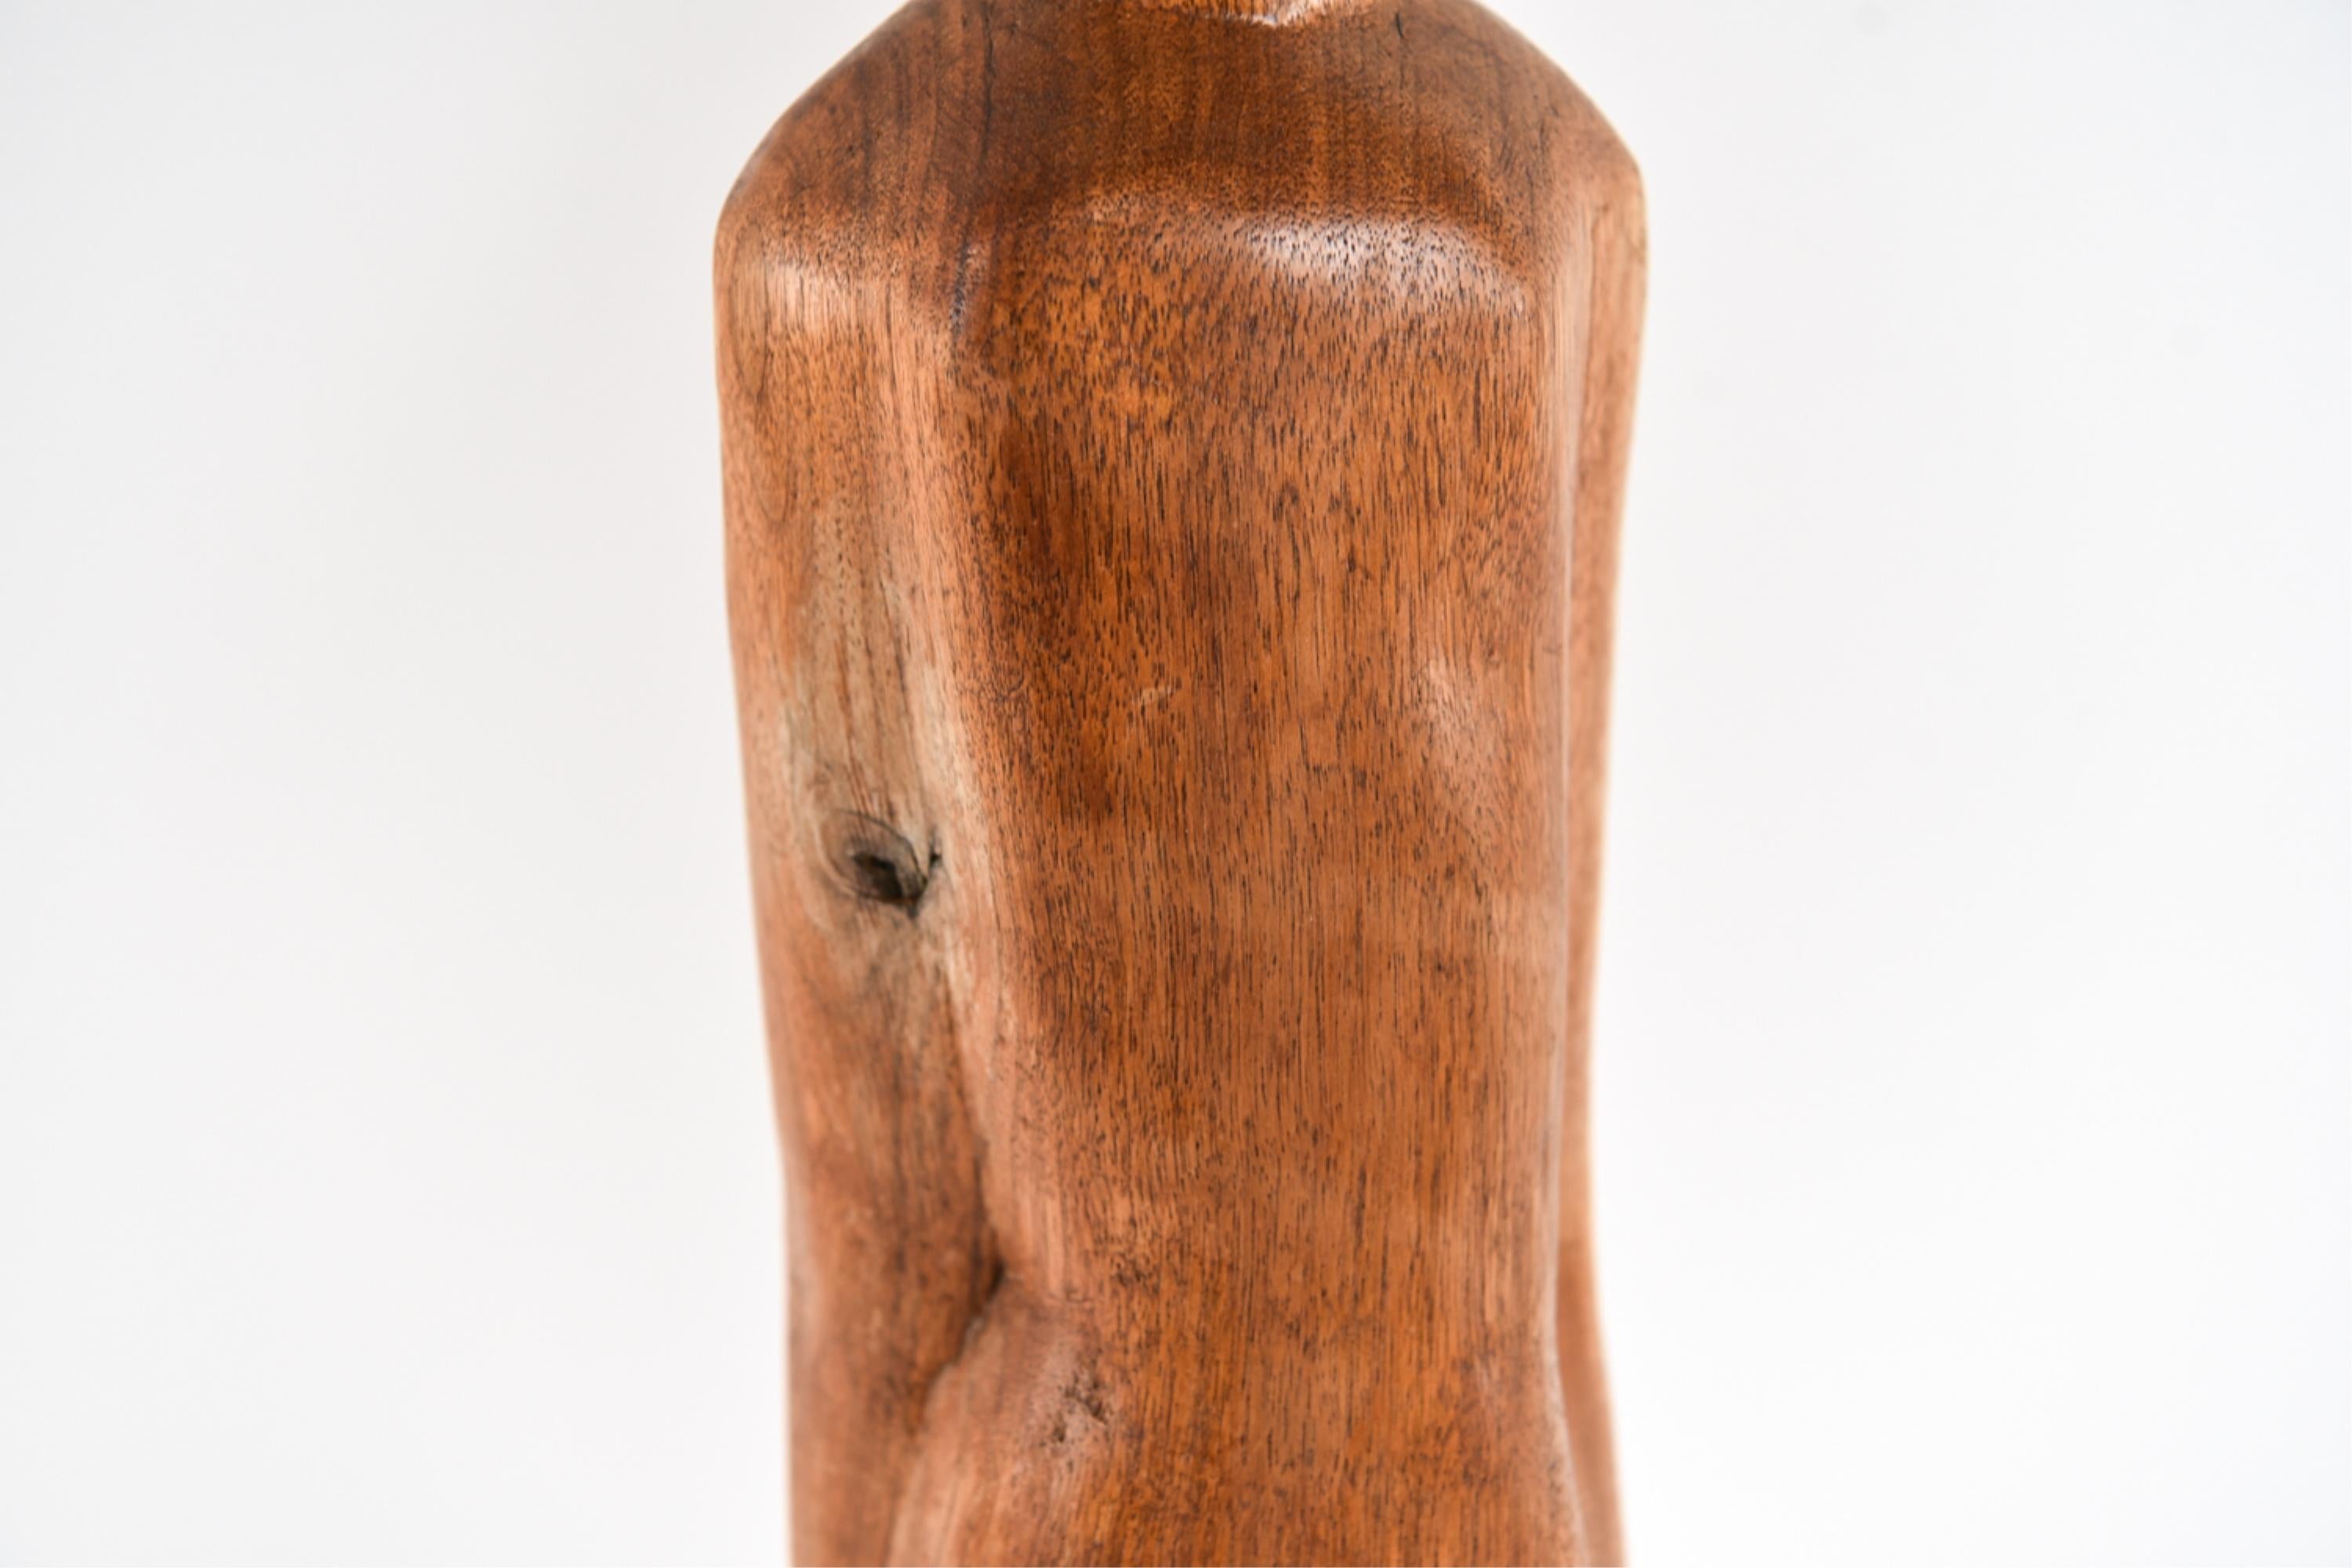 Mid-Century Modern Carved Wood Figurative Sculpture Attributed to Elaine Kaufman Feiner circa 1960s